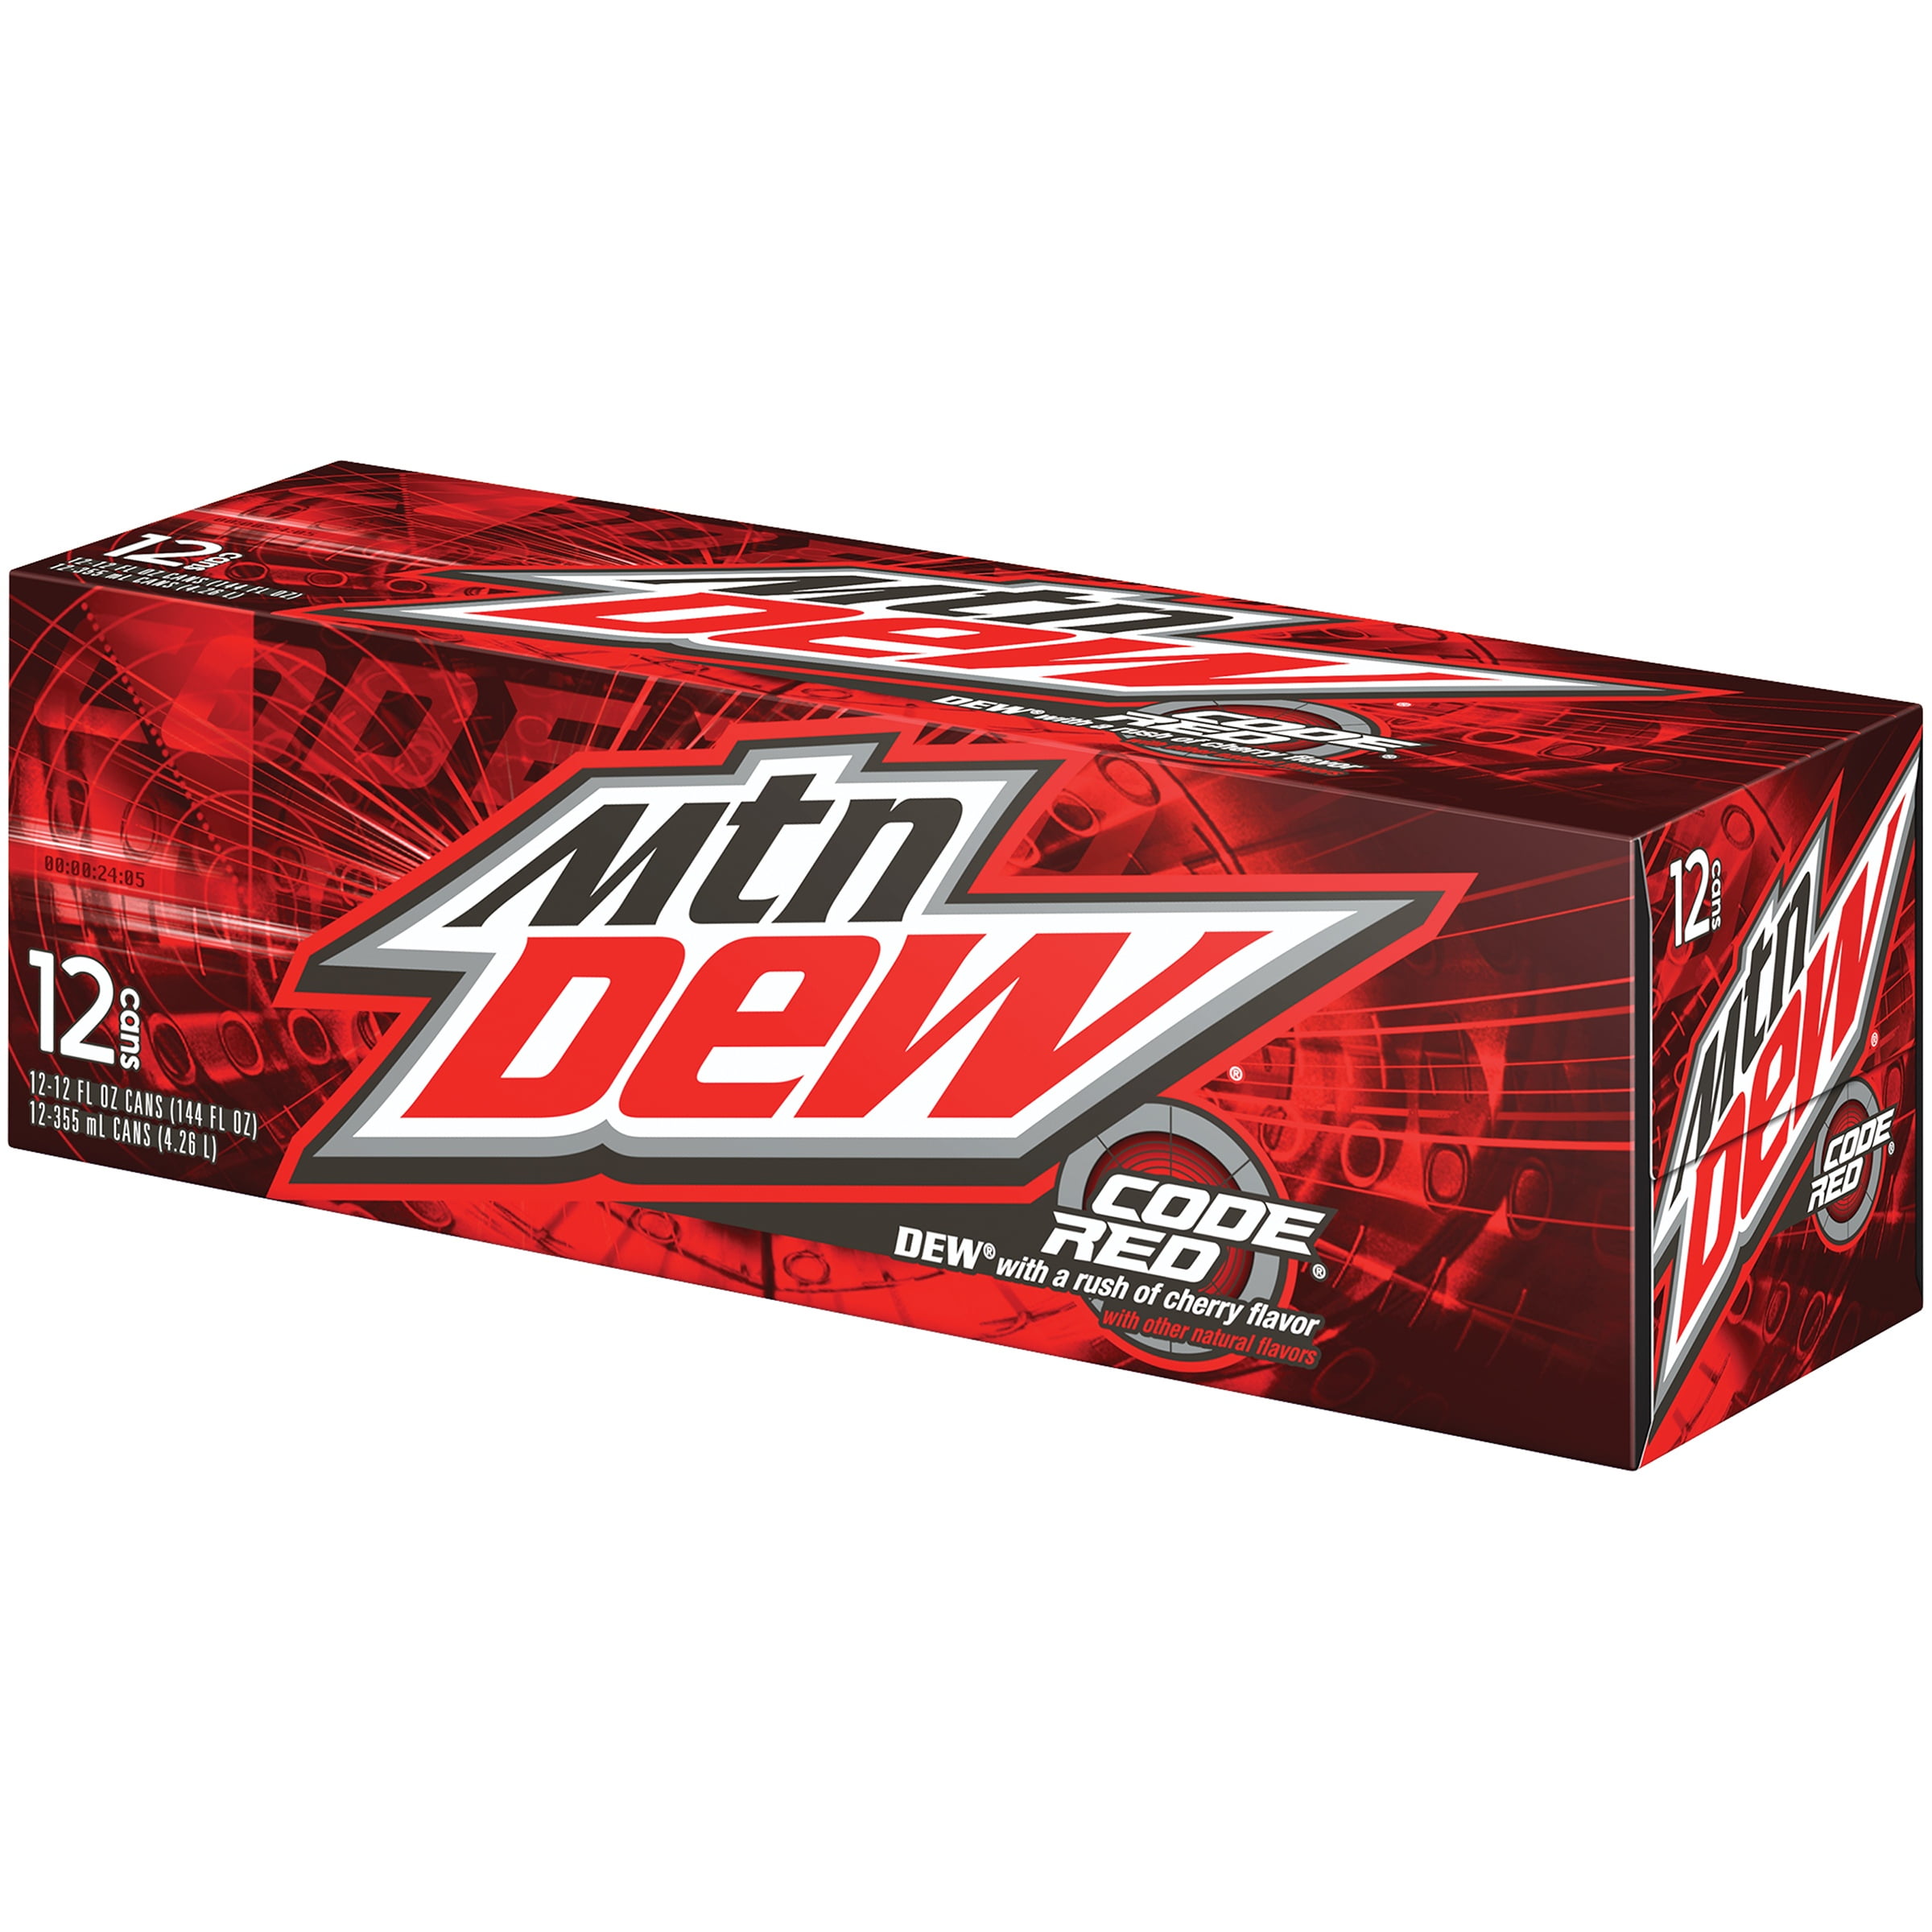 32 Mountain Dew Red Label Label Design Ideas